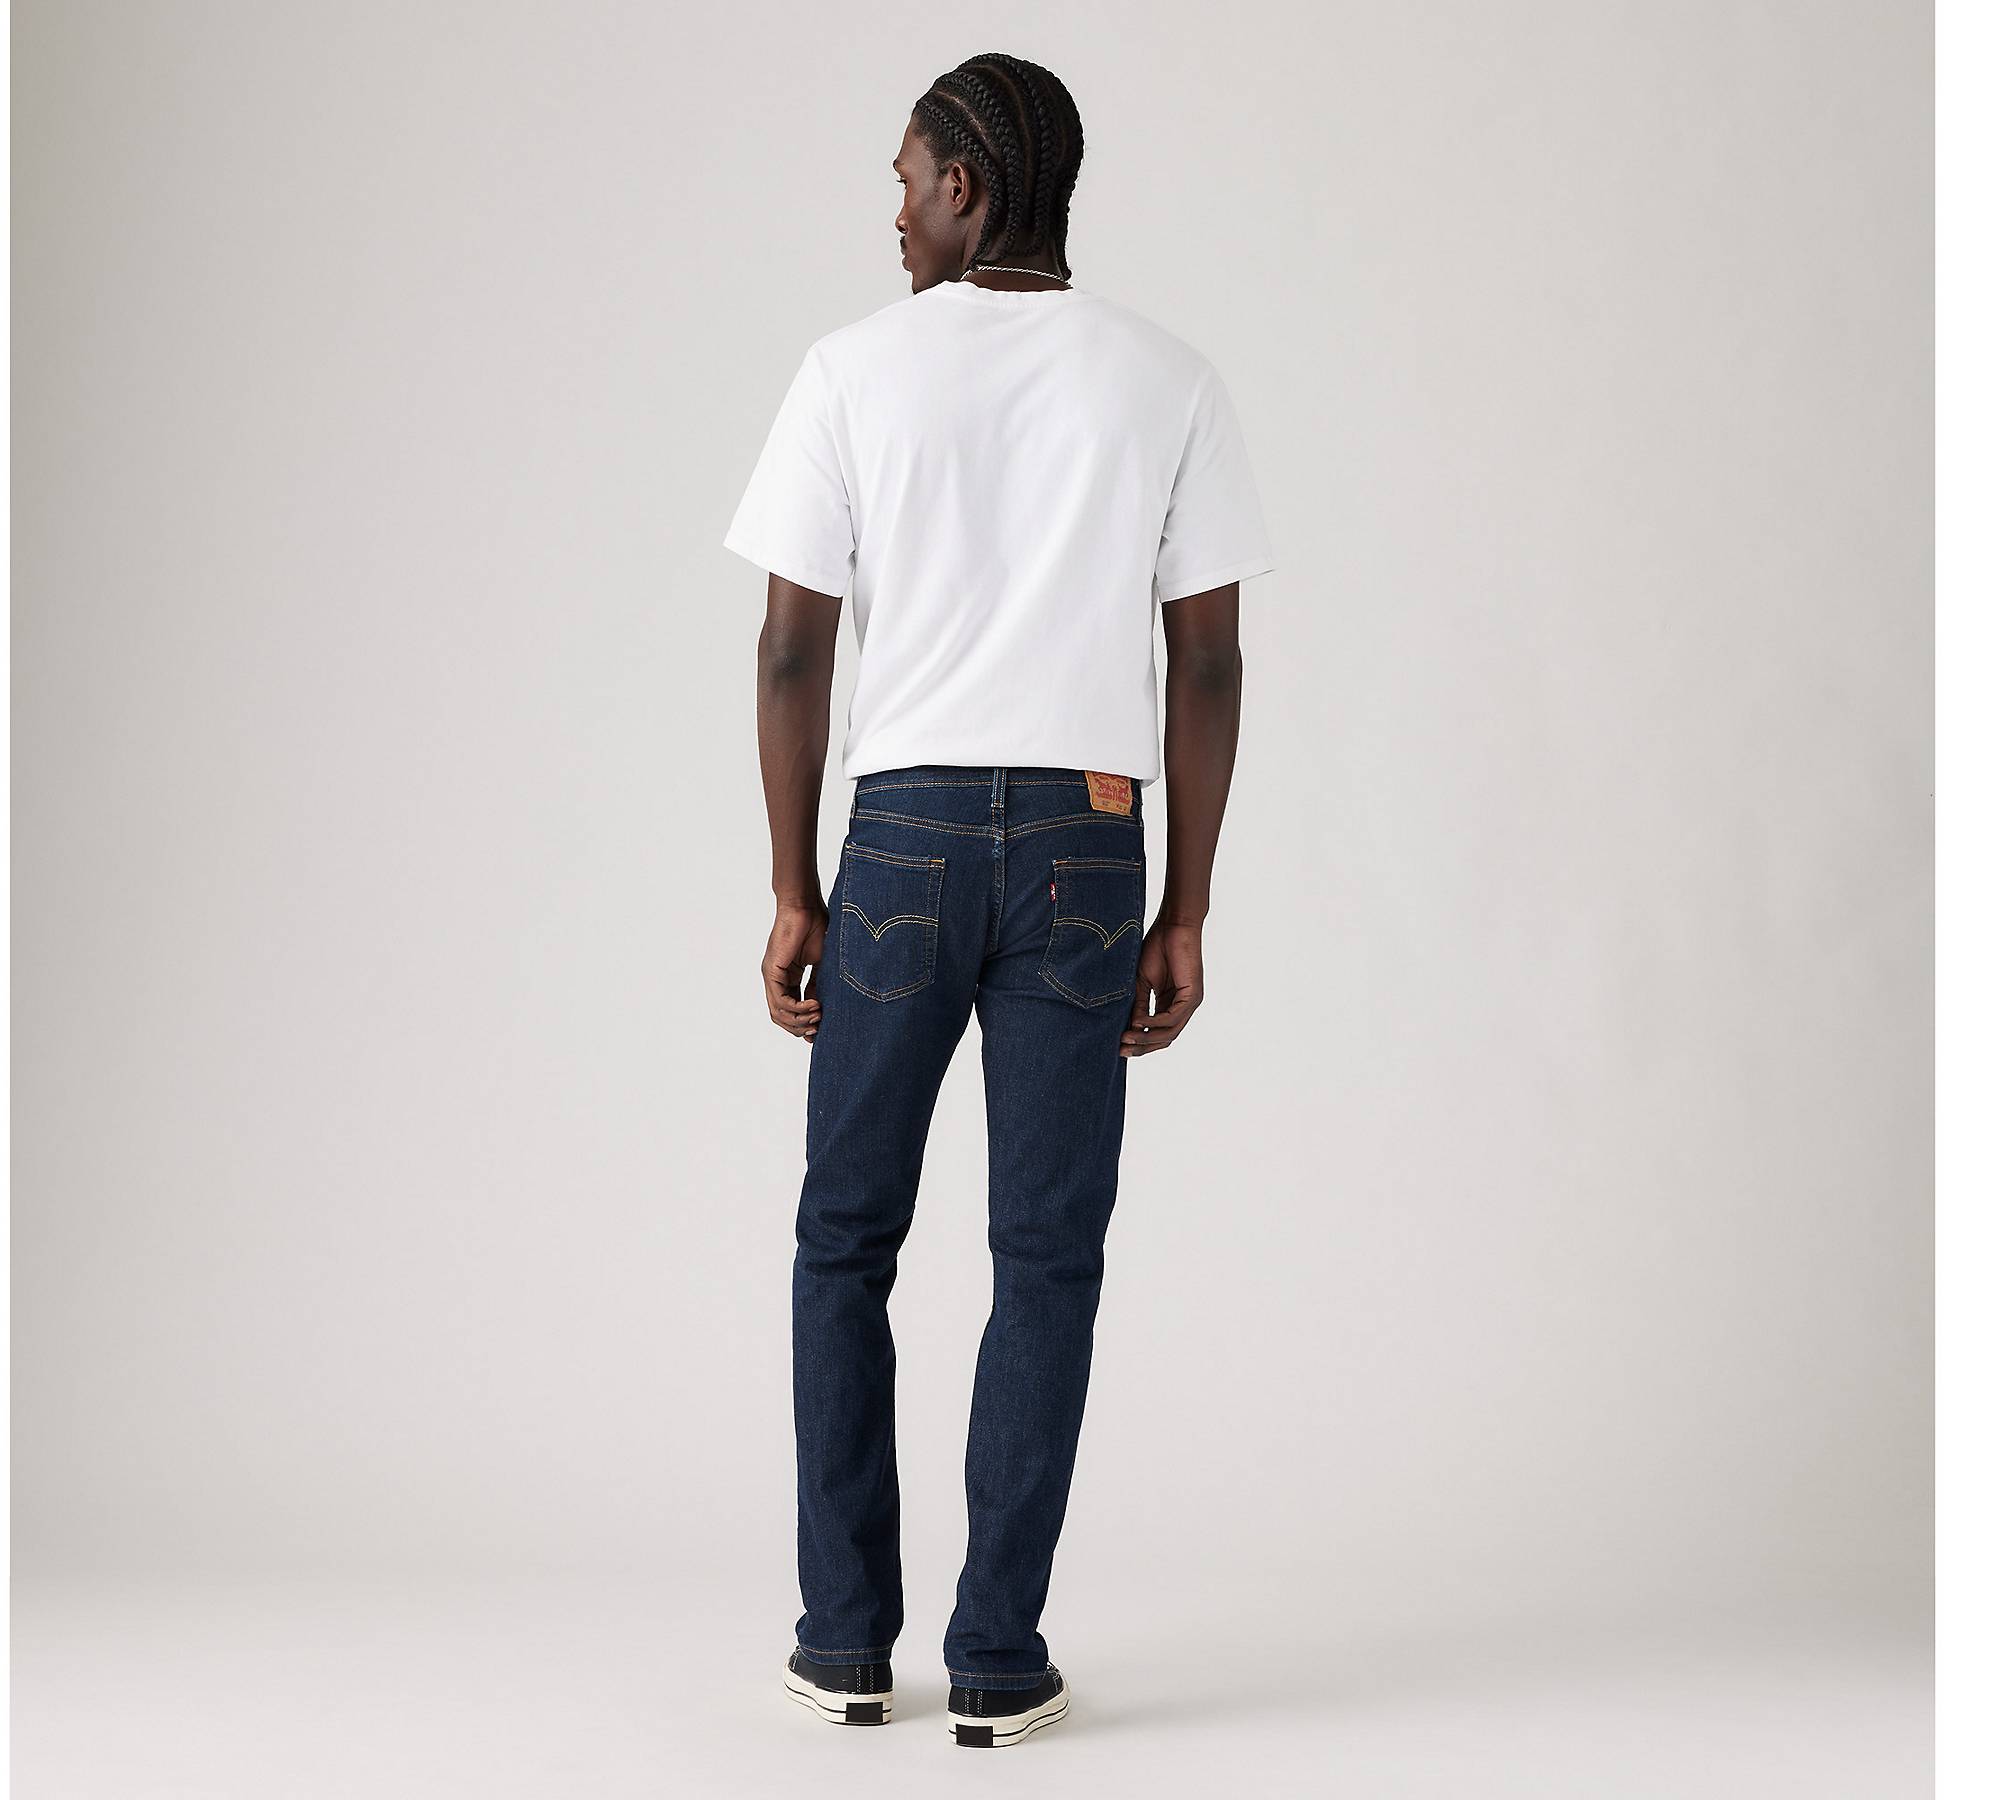 513™ Slim Straight Men's Jeans - Dark Wash | Levi's® US